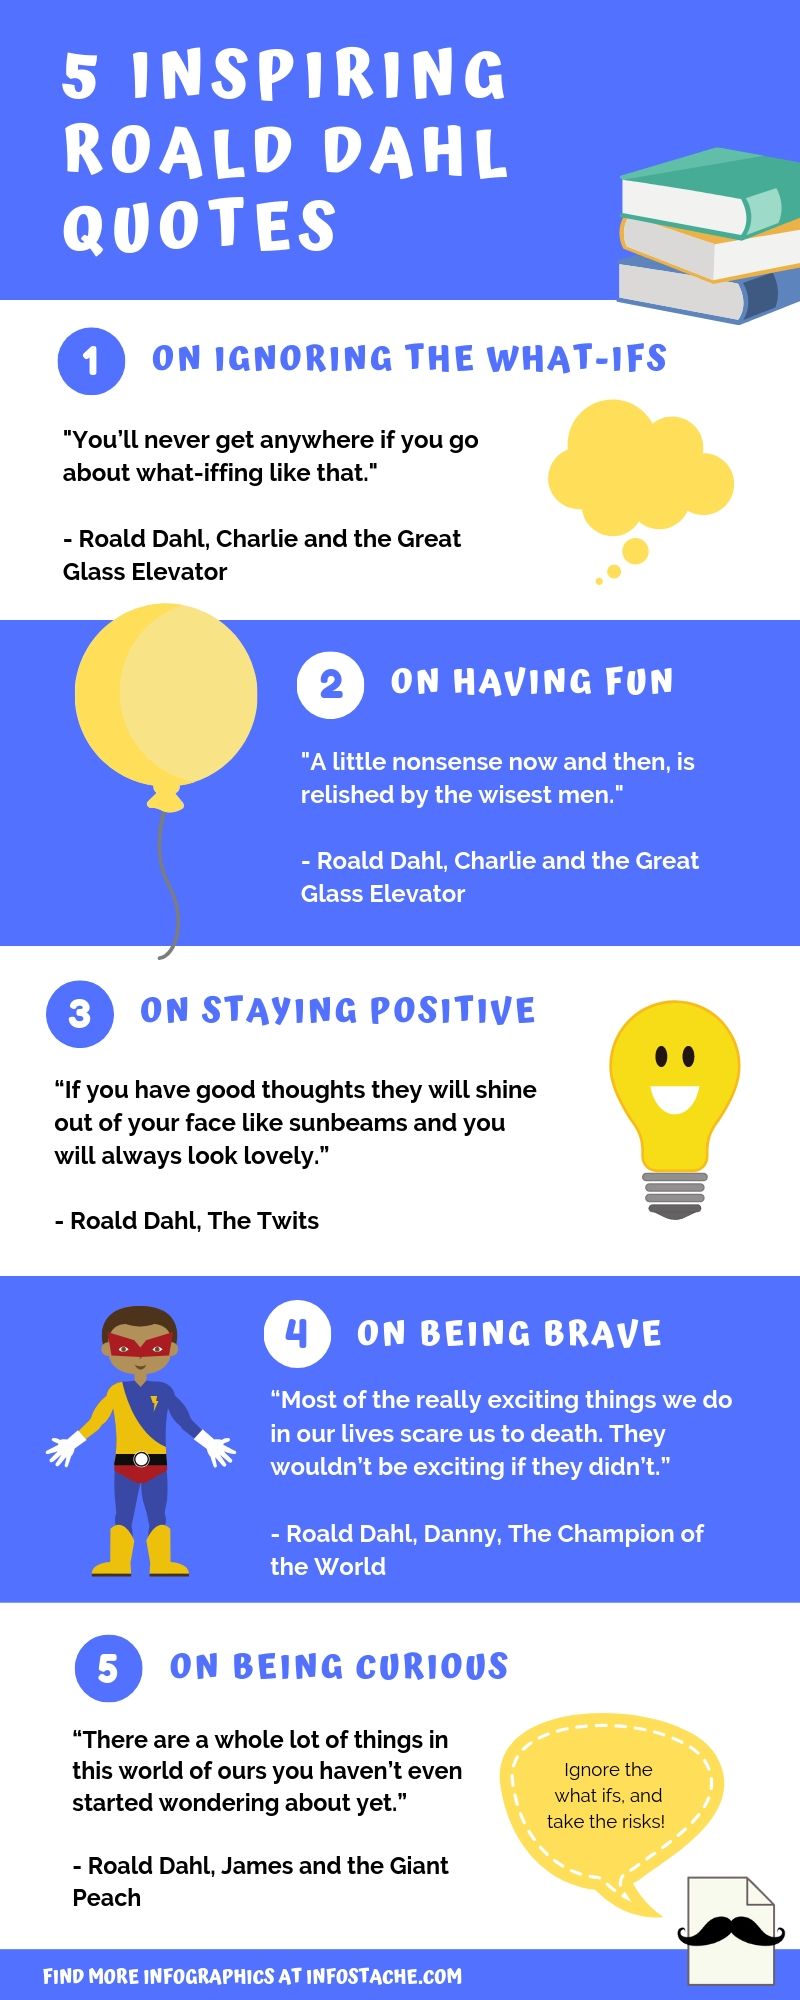 5 Inspiring Roald Dahl Quotes - Infographic